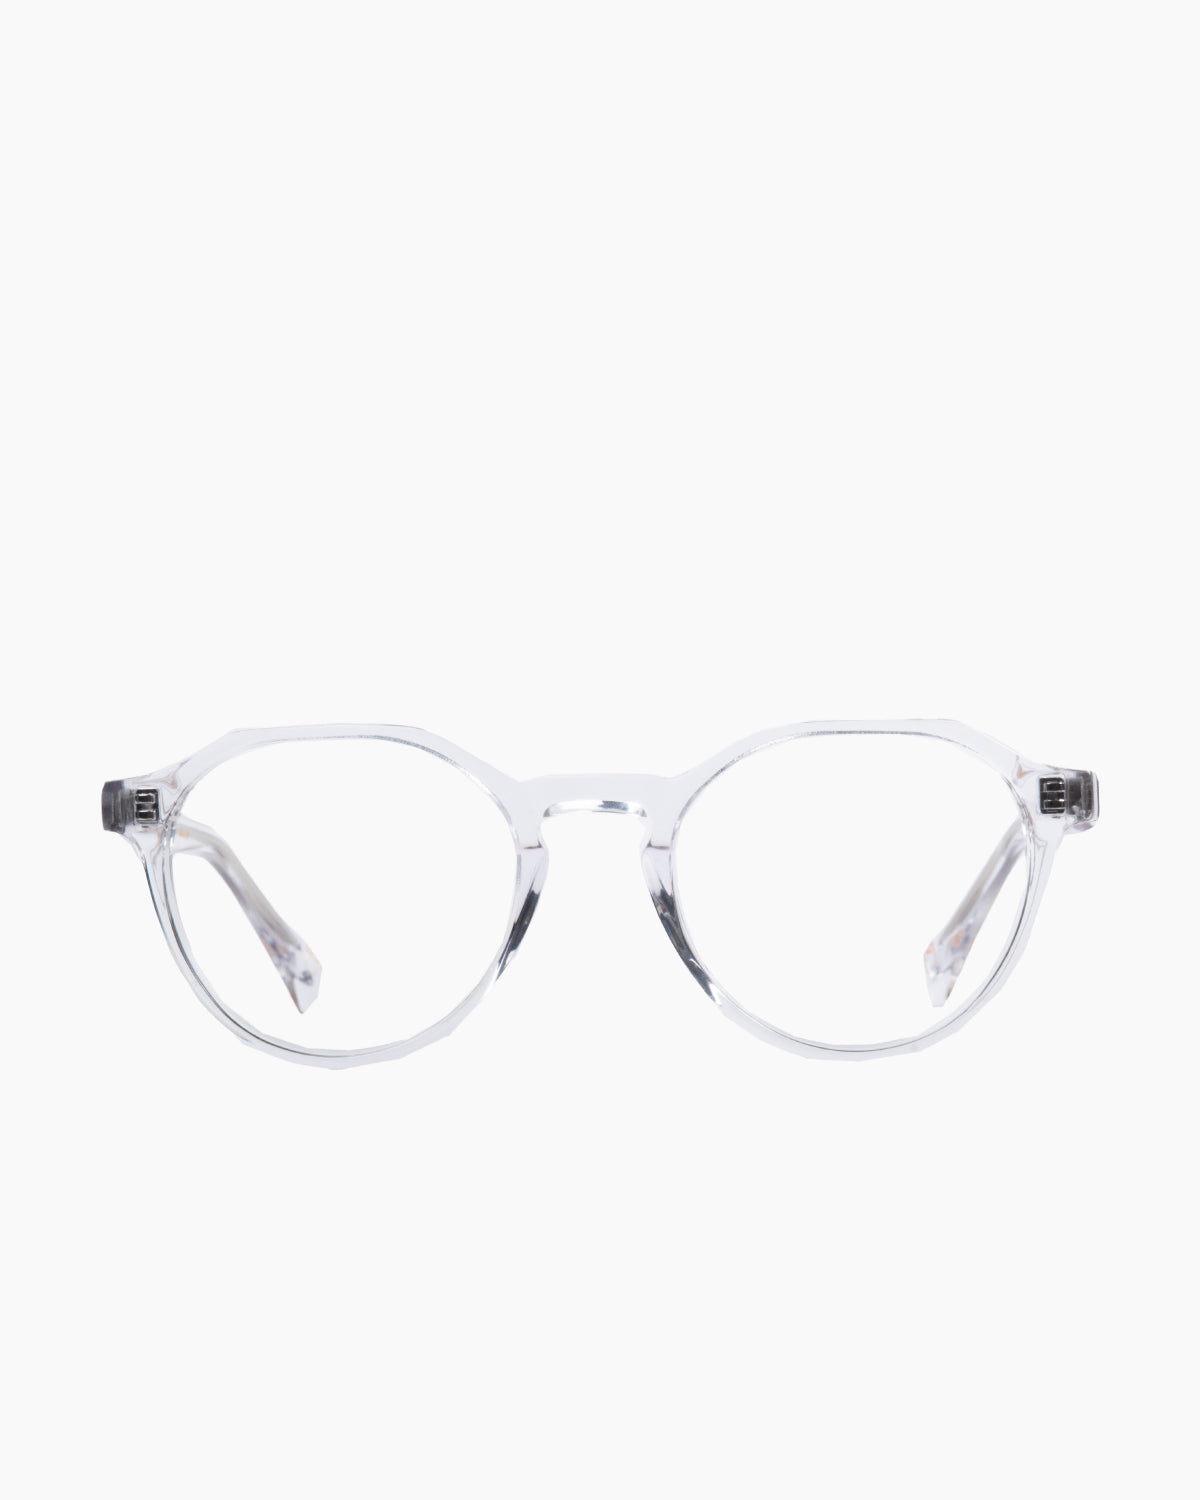 Spectacleeyeworks - Amir - 708 | Bar à lunettes:  Marie-Sophie Dion